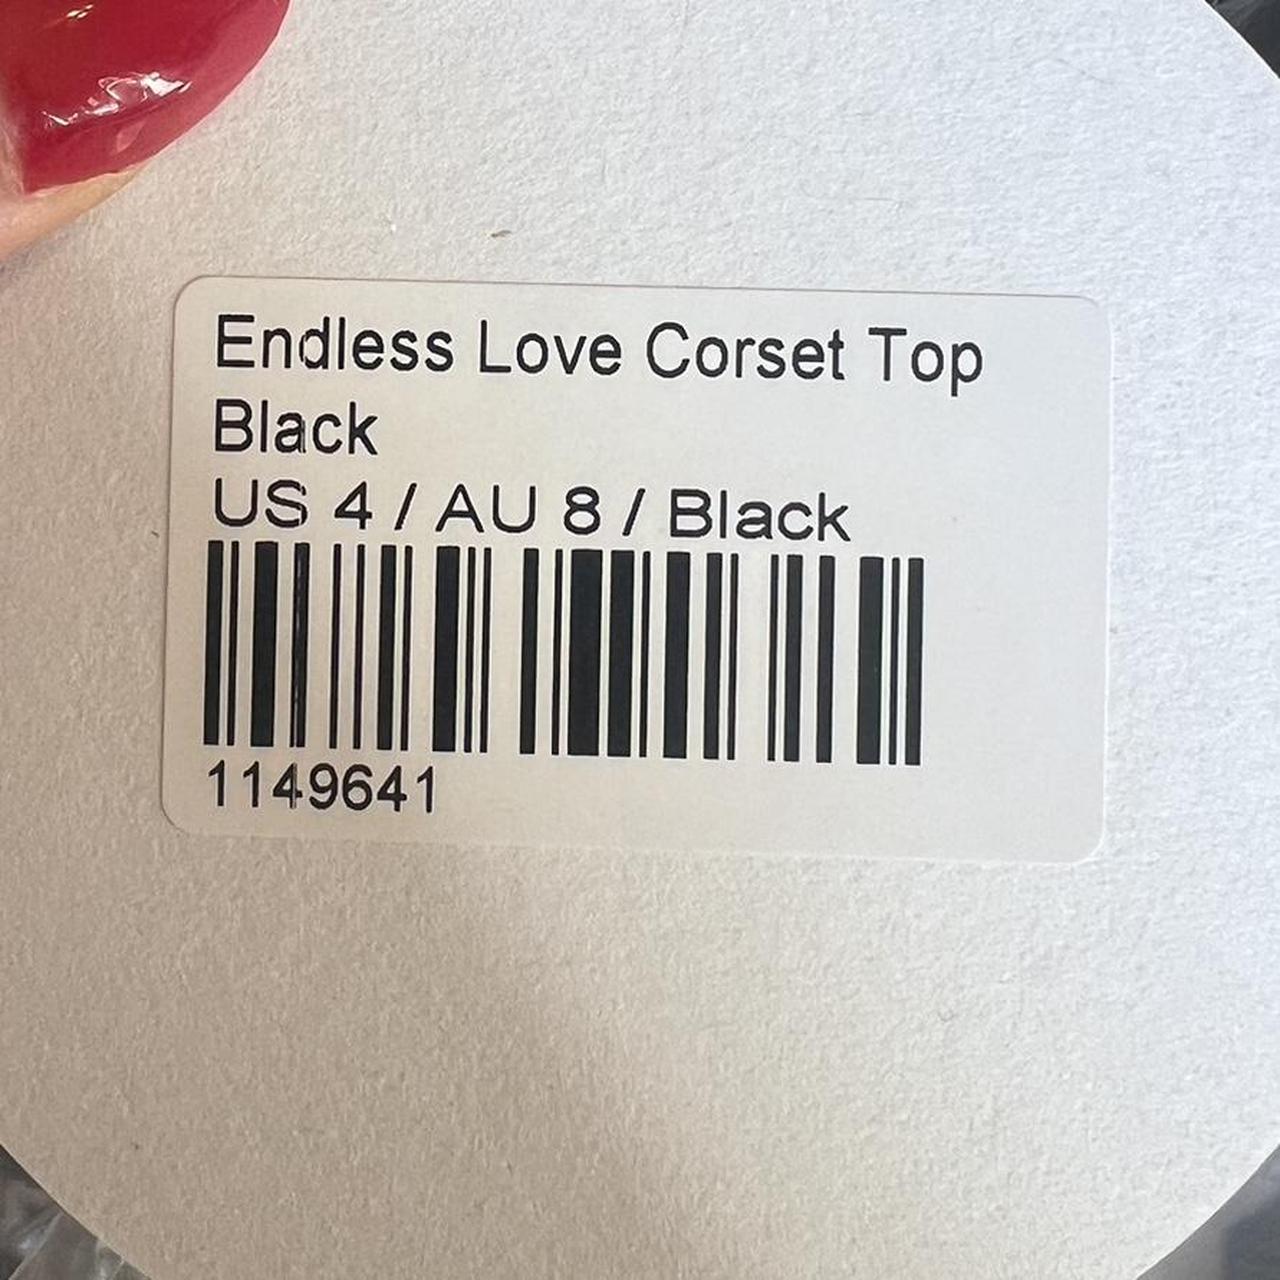 Endless Love Corset Top Black